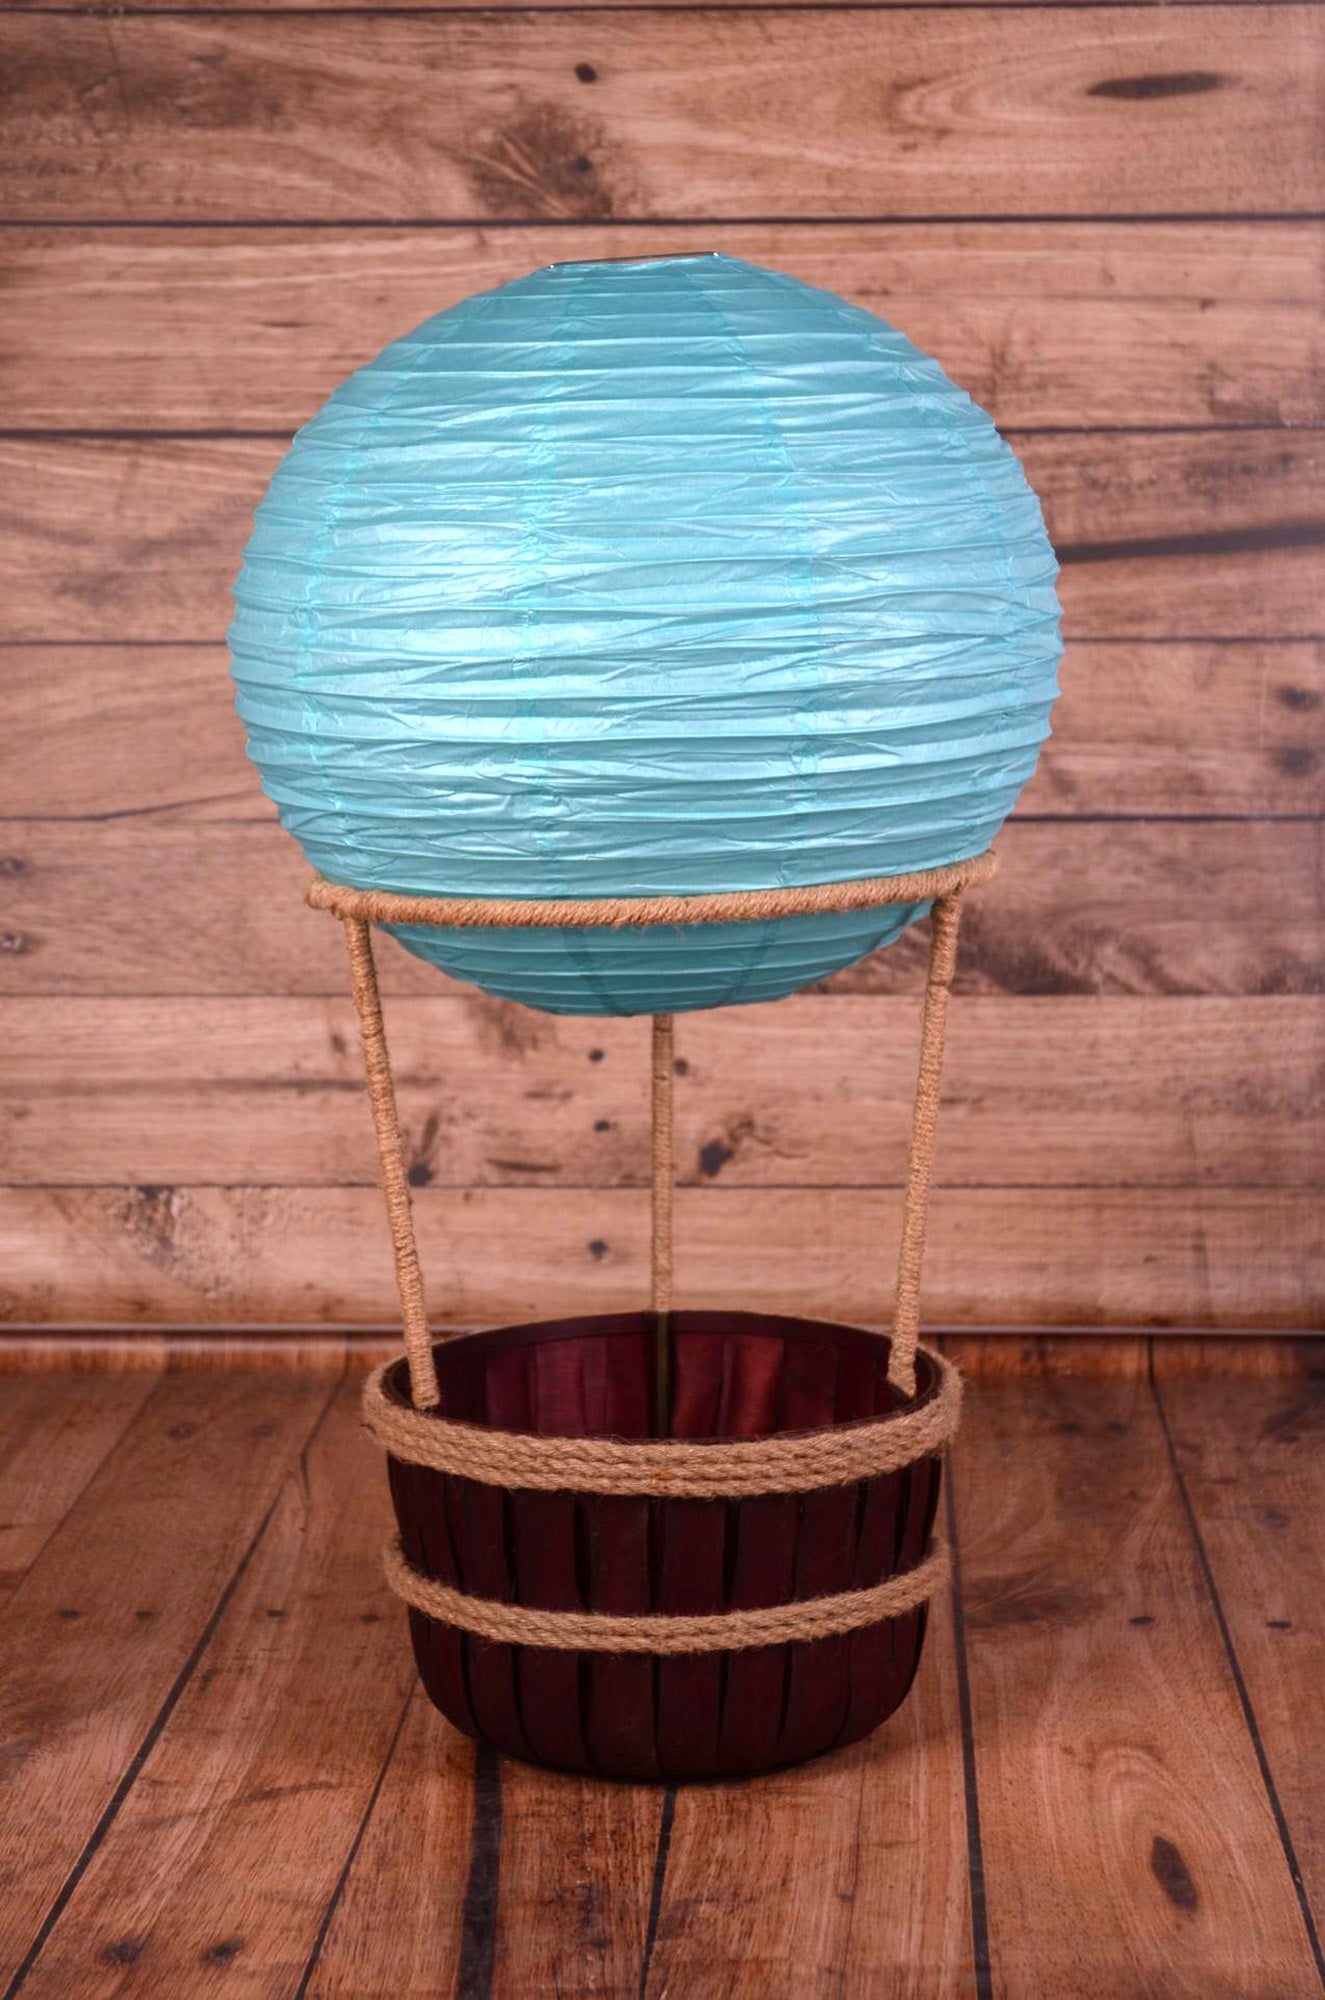 Hot Air Balloon Basket AND 6 Balloons - Newborn Studio Props